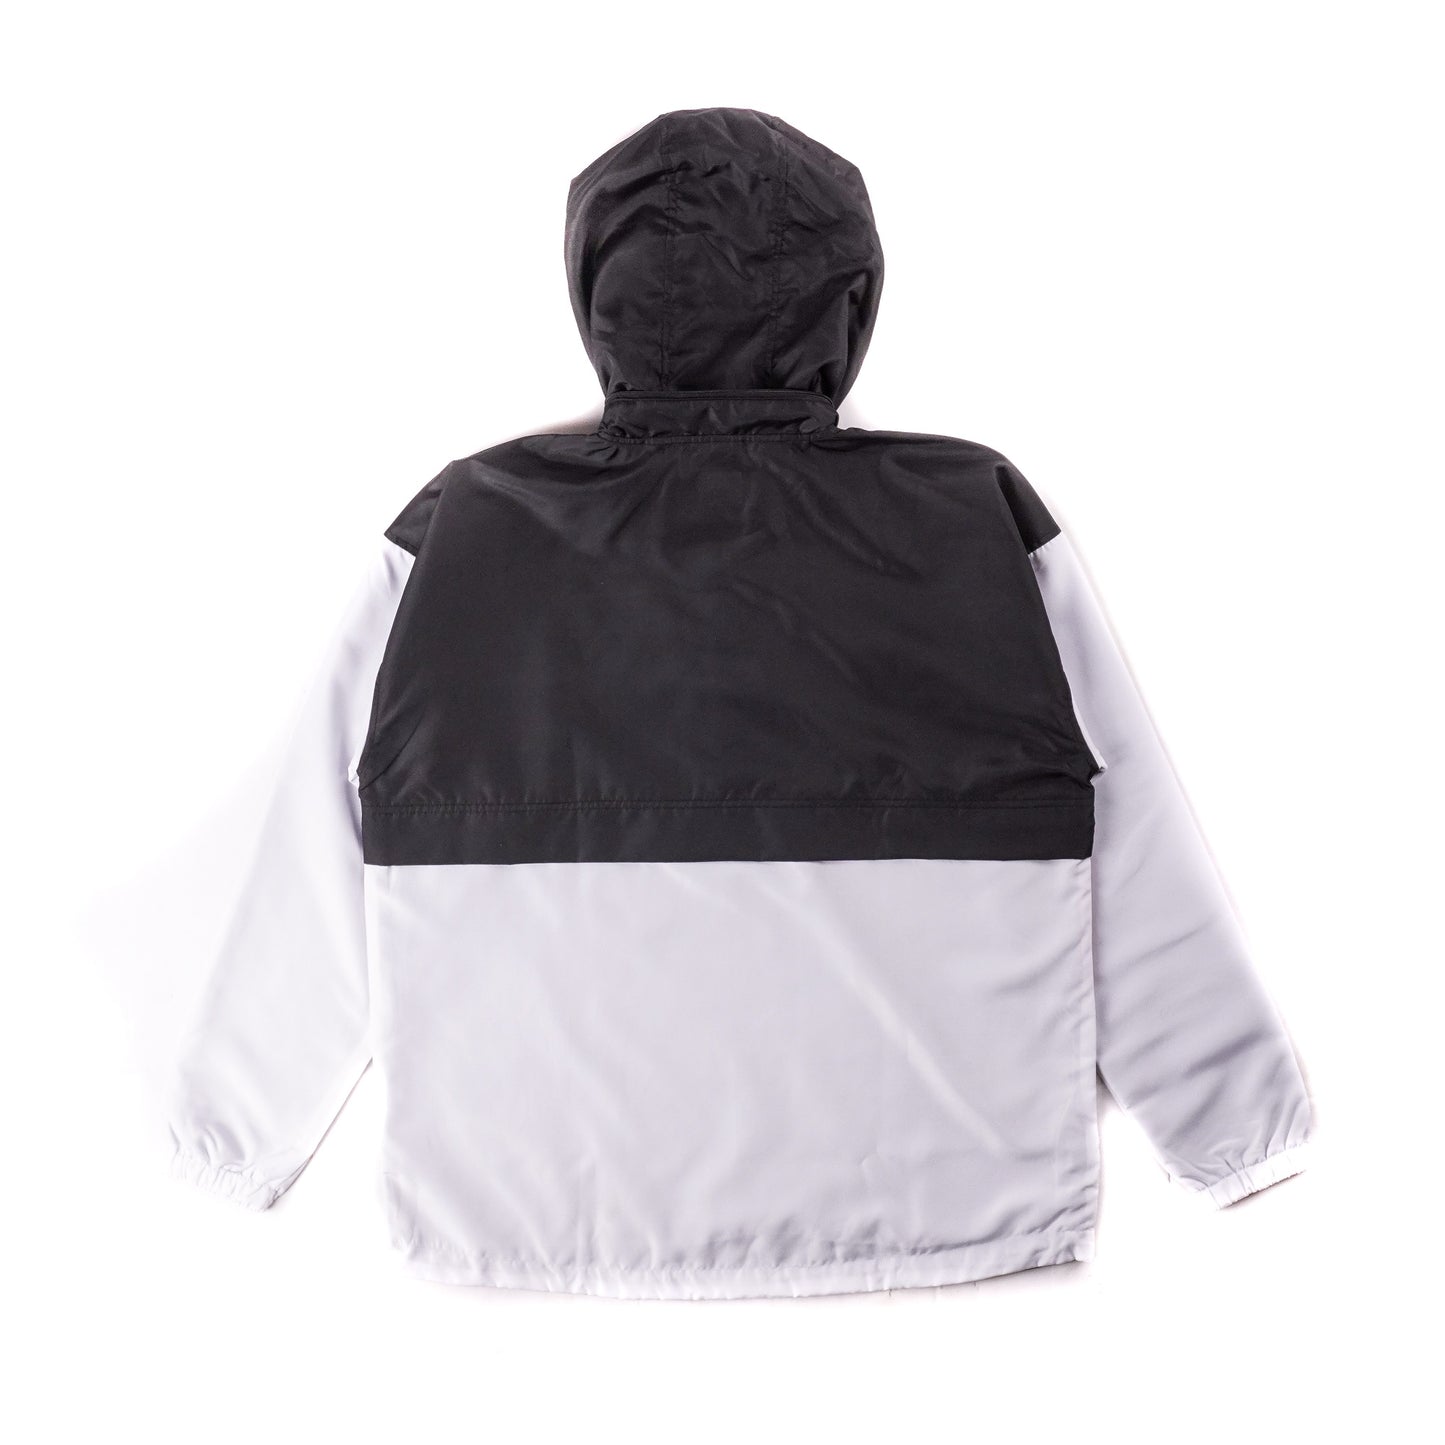 AZA Jacket Half Zipper Let's Goal Edition - Black / White